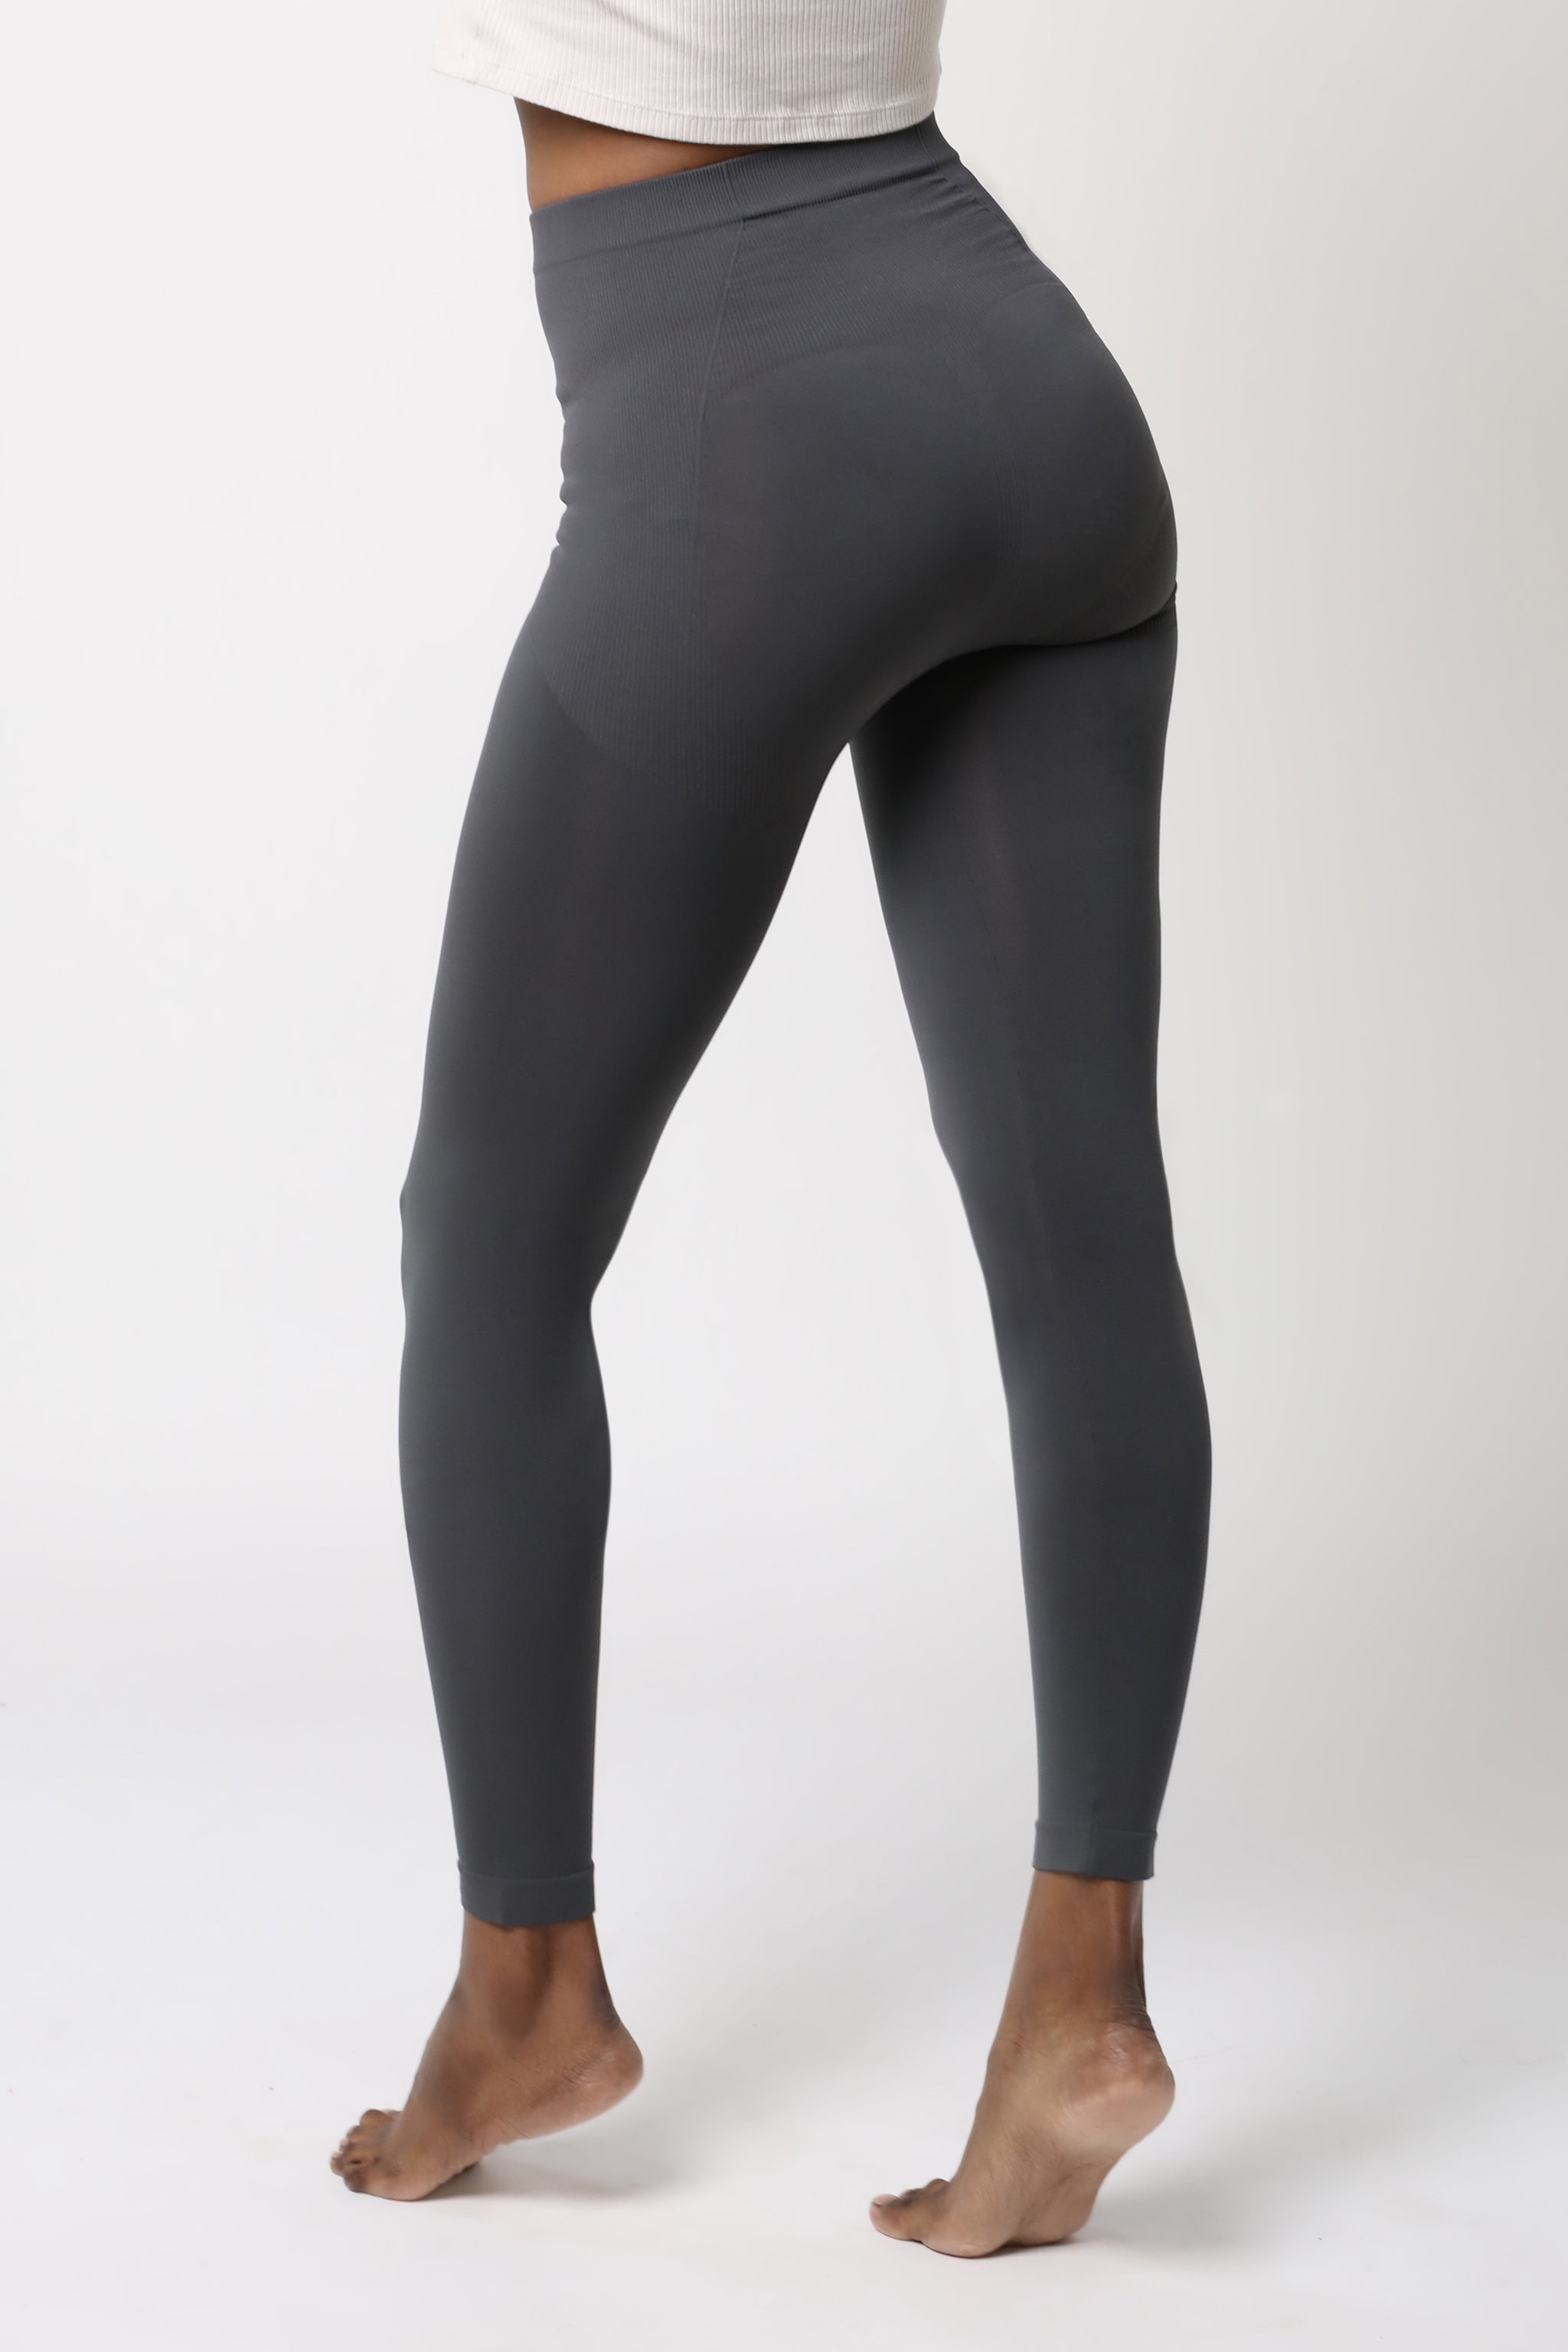 legging for women - Charcoal grey